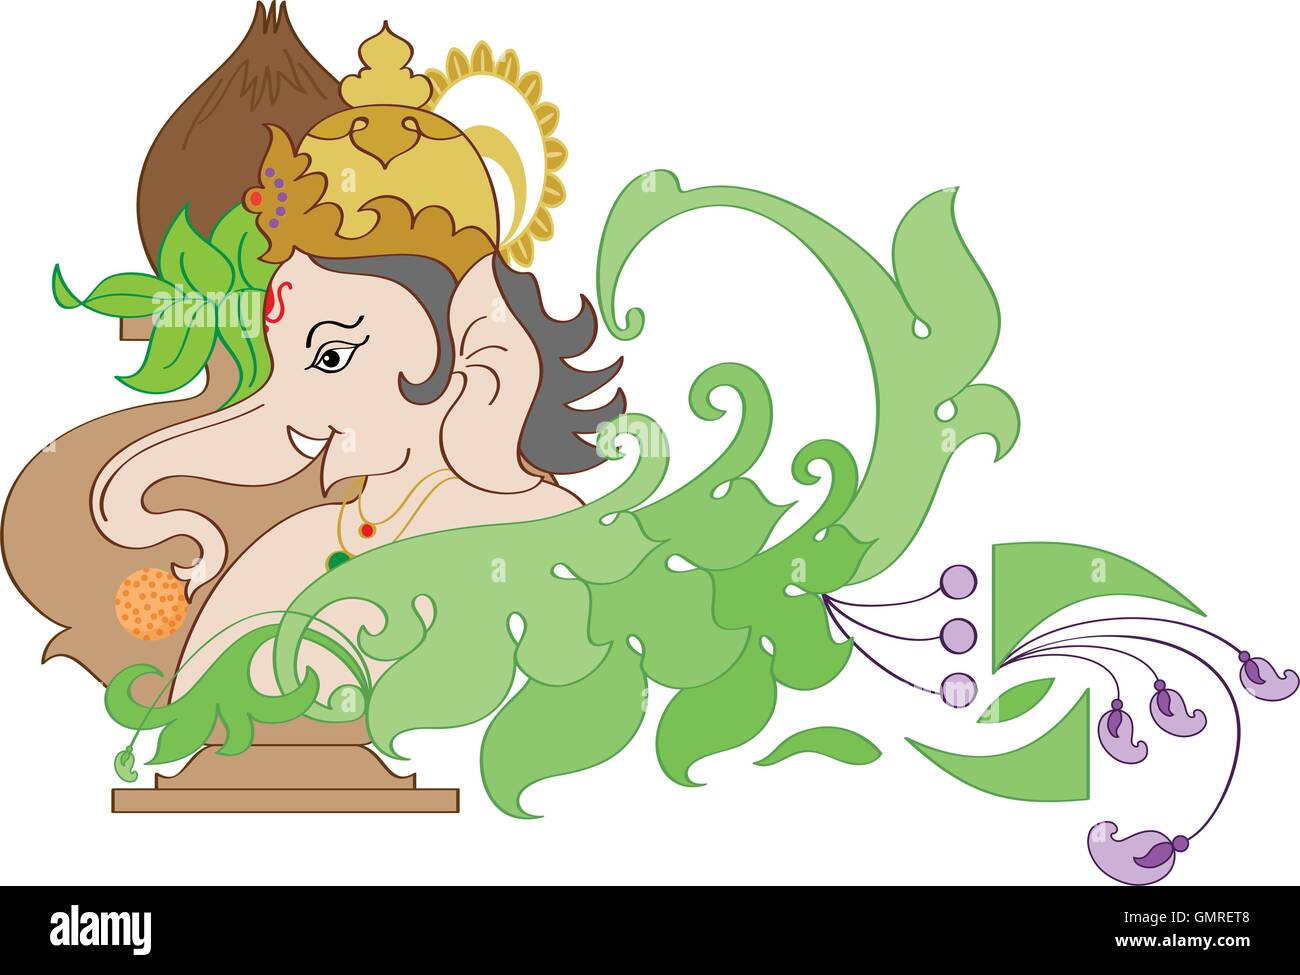 Ganesha The Lord Of Wisdom Stock Vector